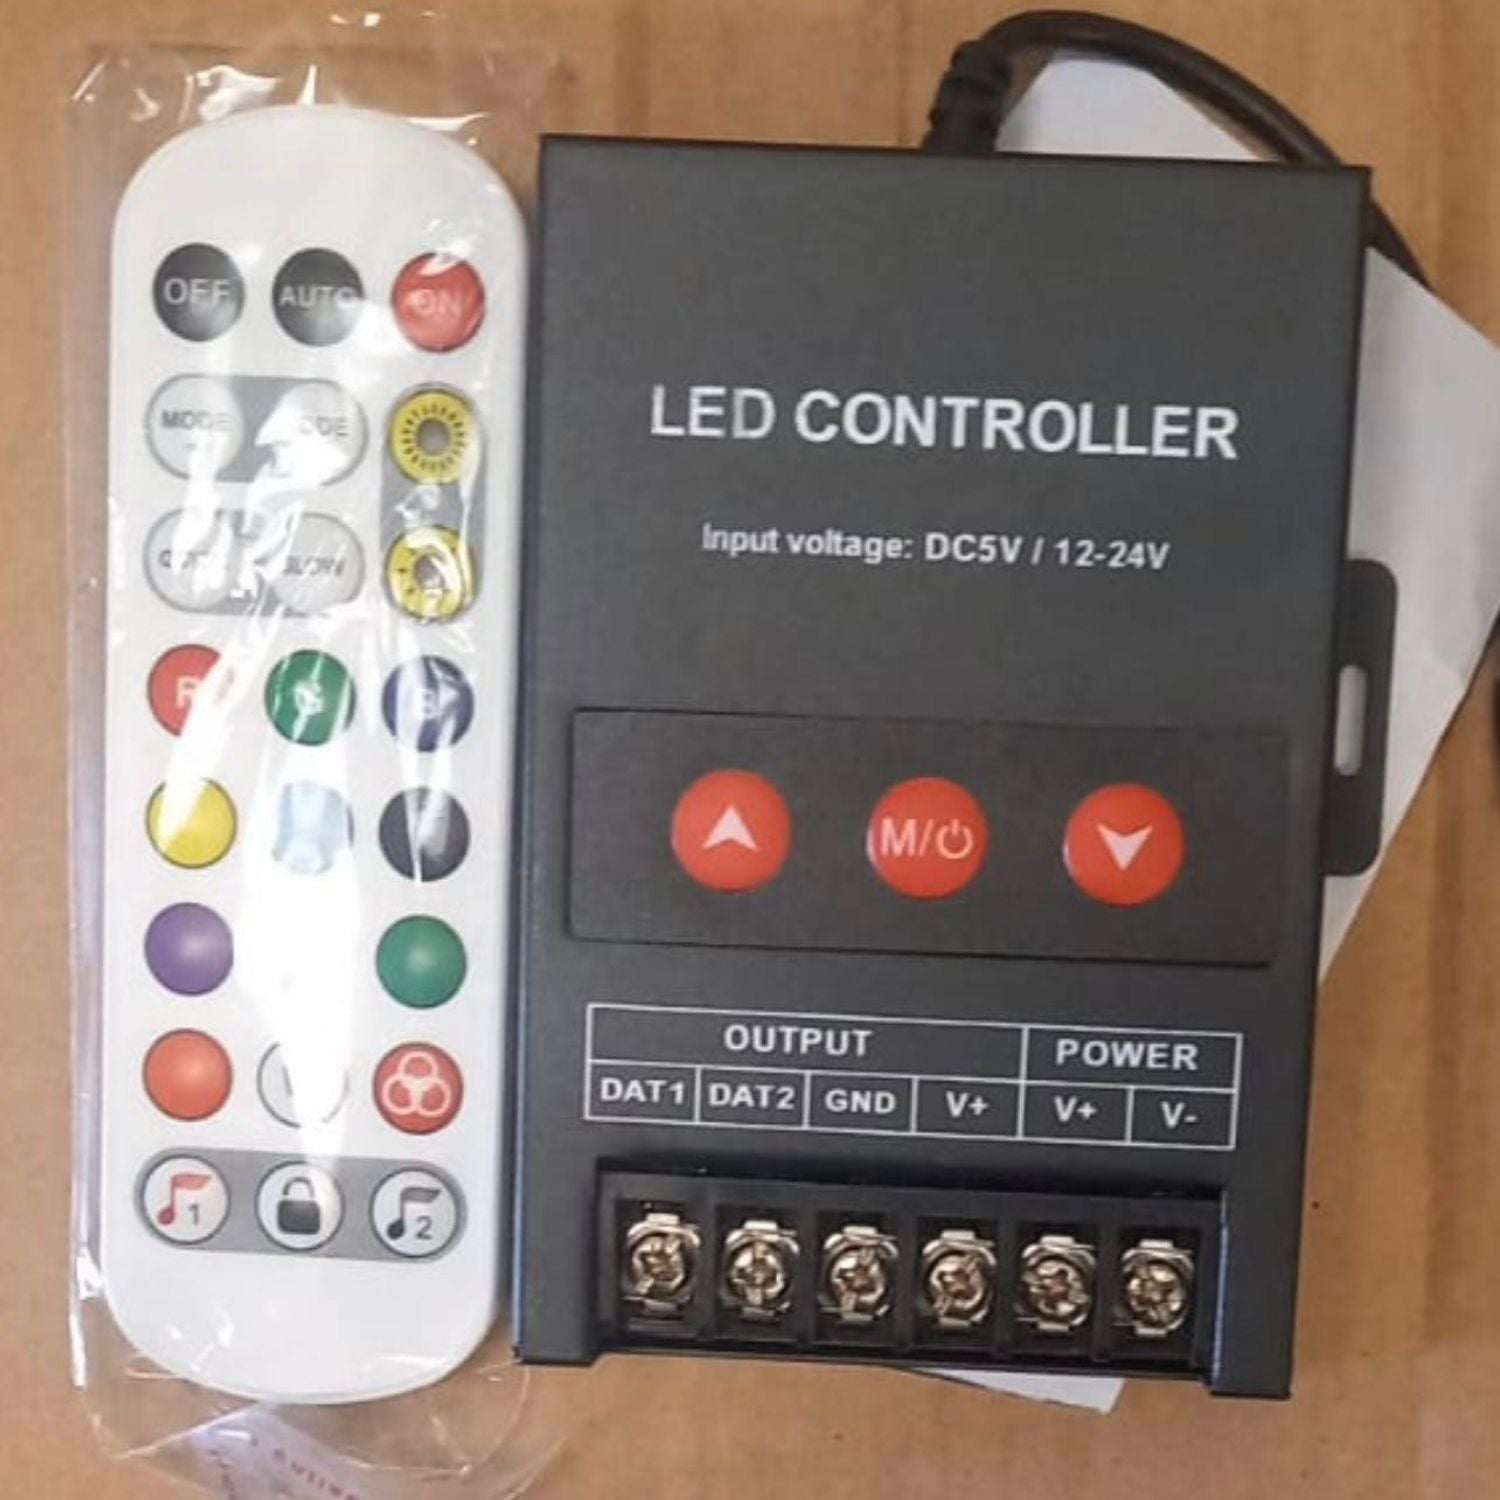 RGB Strip Light & Neon Flex WIFI Controller with Remote DC 5V-24V with Tuya App - ATOM LED